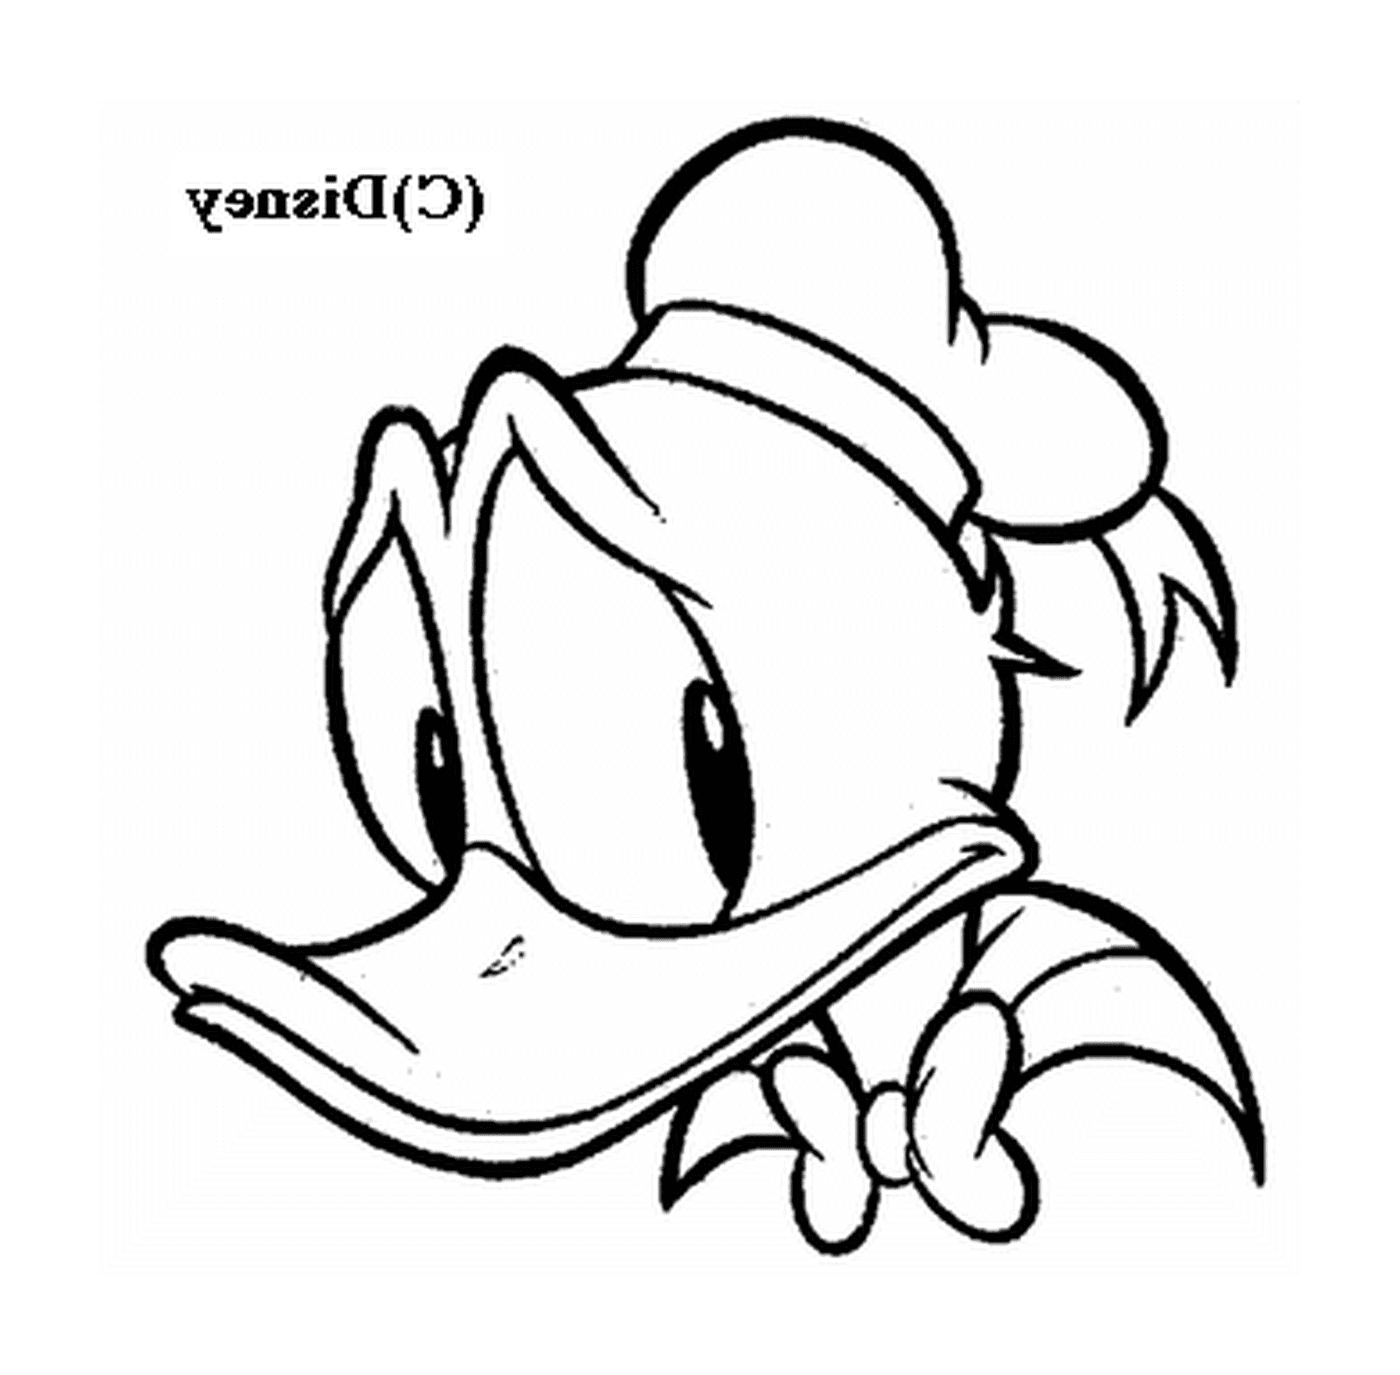   La tête expressive de Donald 